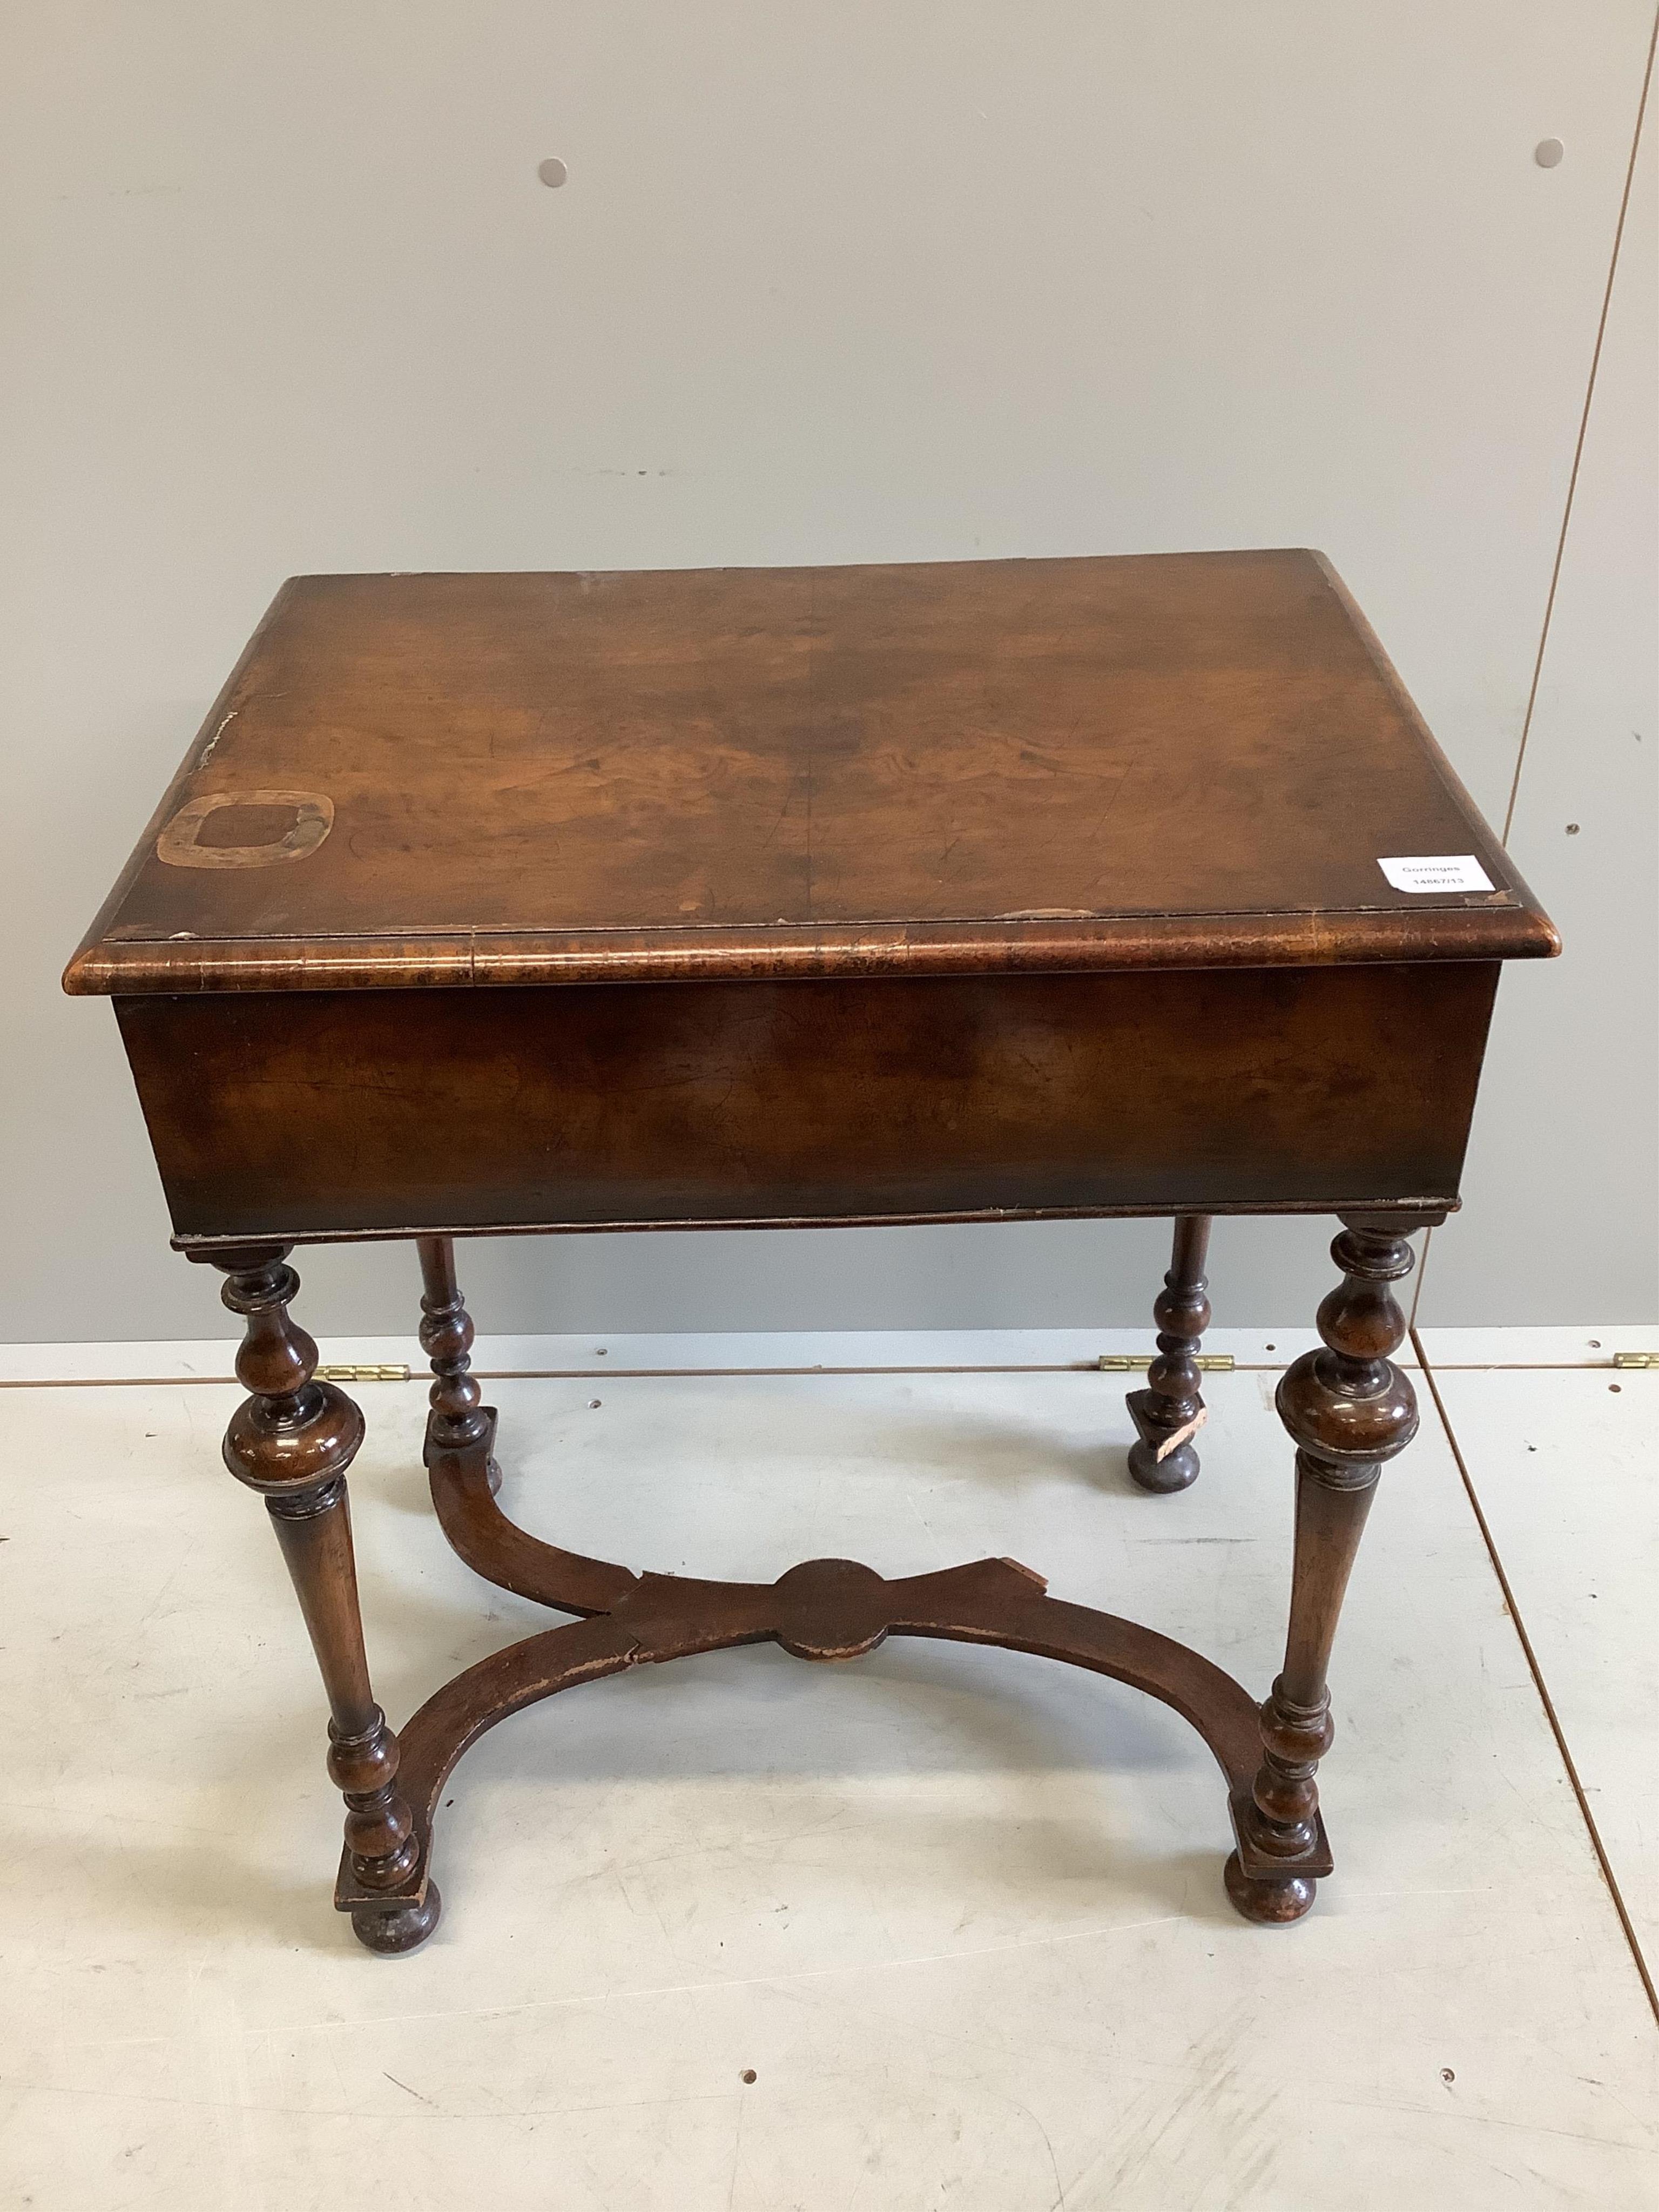 A Queen Anne Revival walnut hinged top work table, width 61cm, depth 44cm, height 70cm. Condition - fair